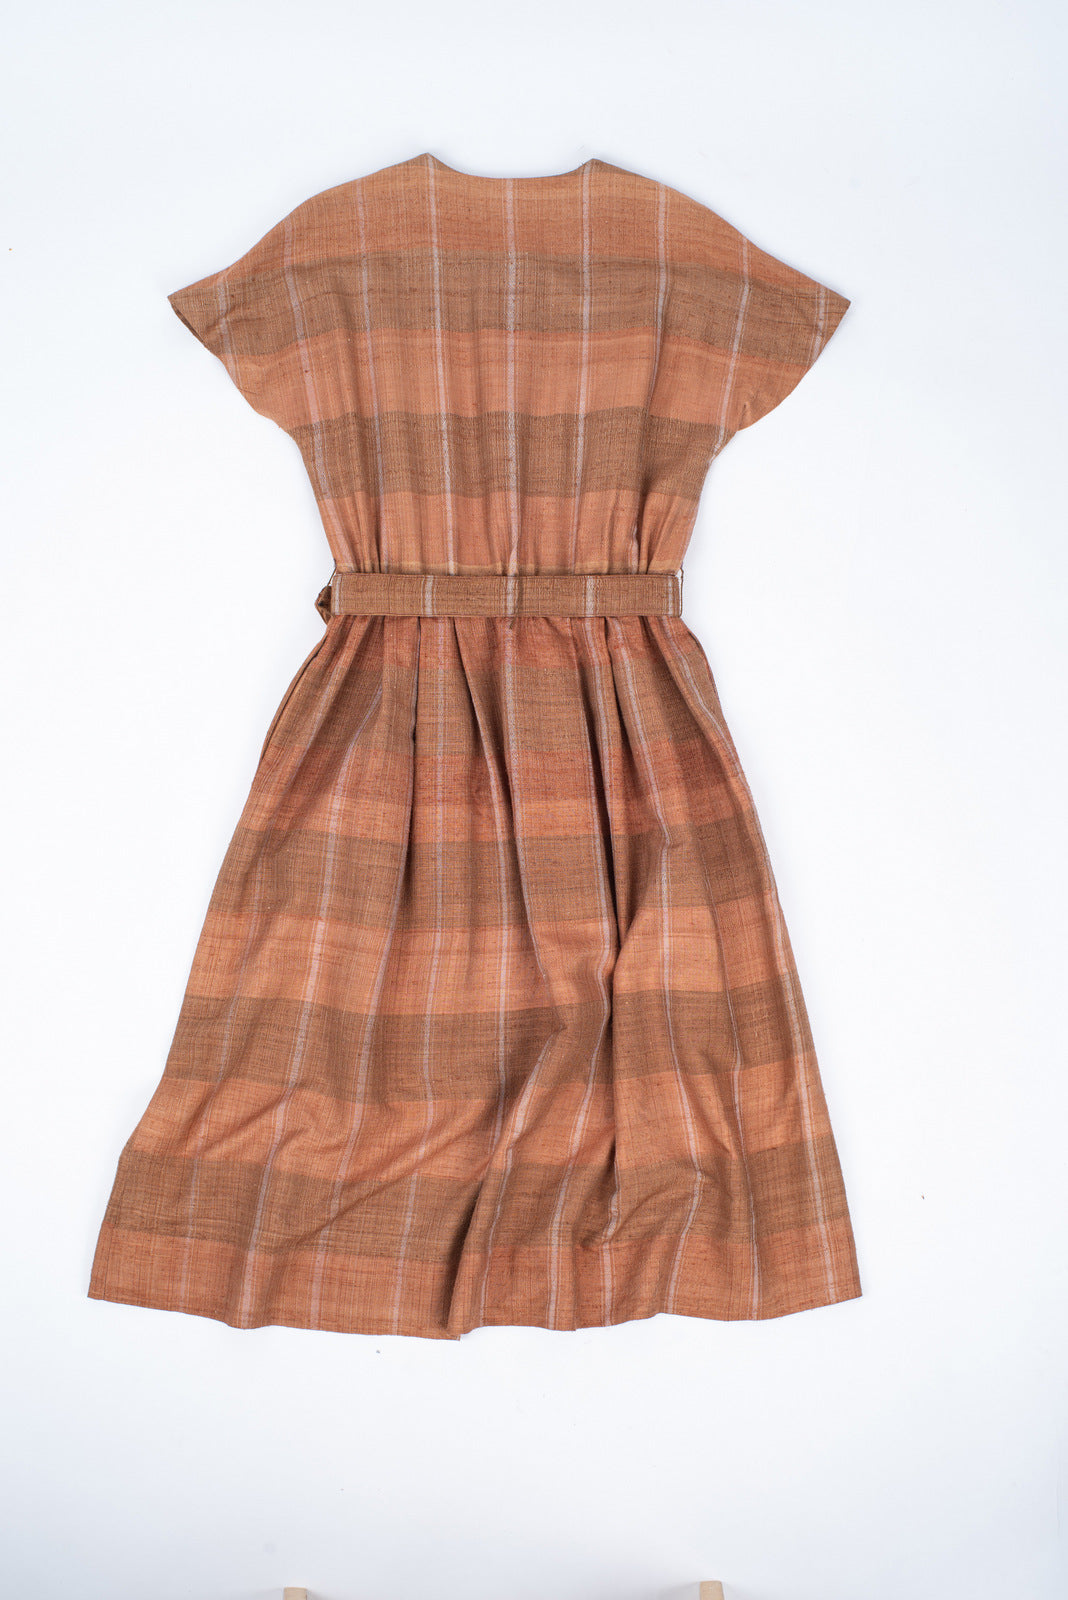 Handwoven 100% Silk Tan Brown Button Up Dress, Size M